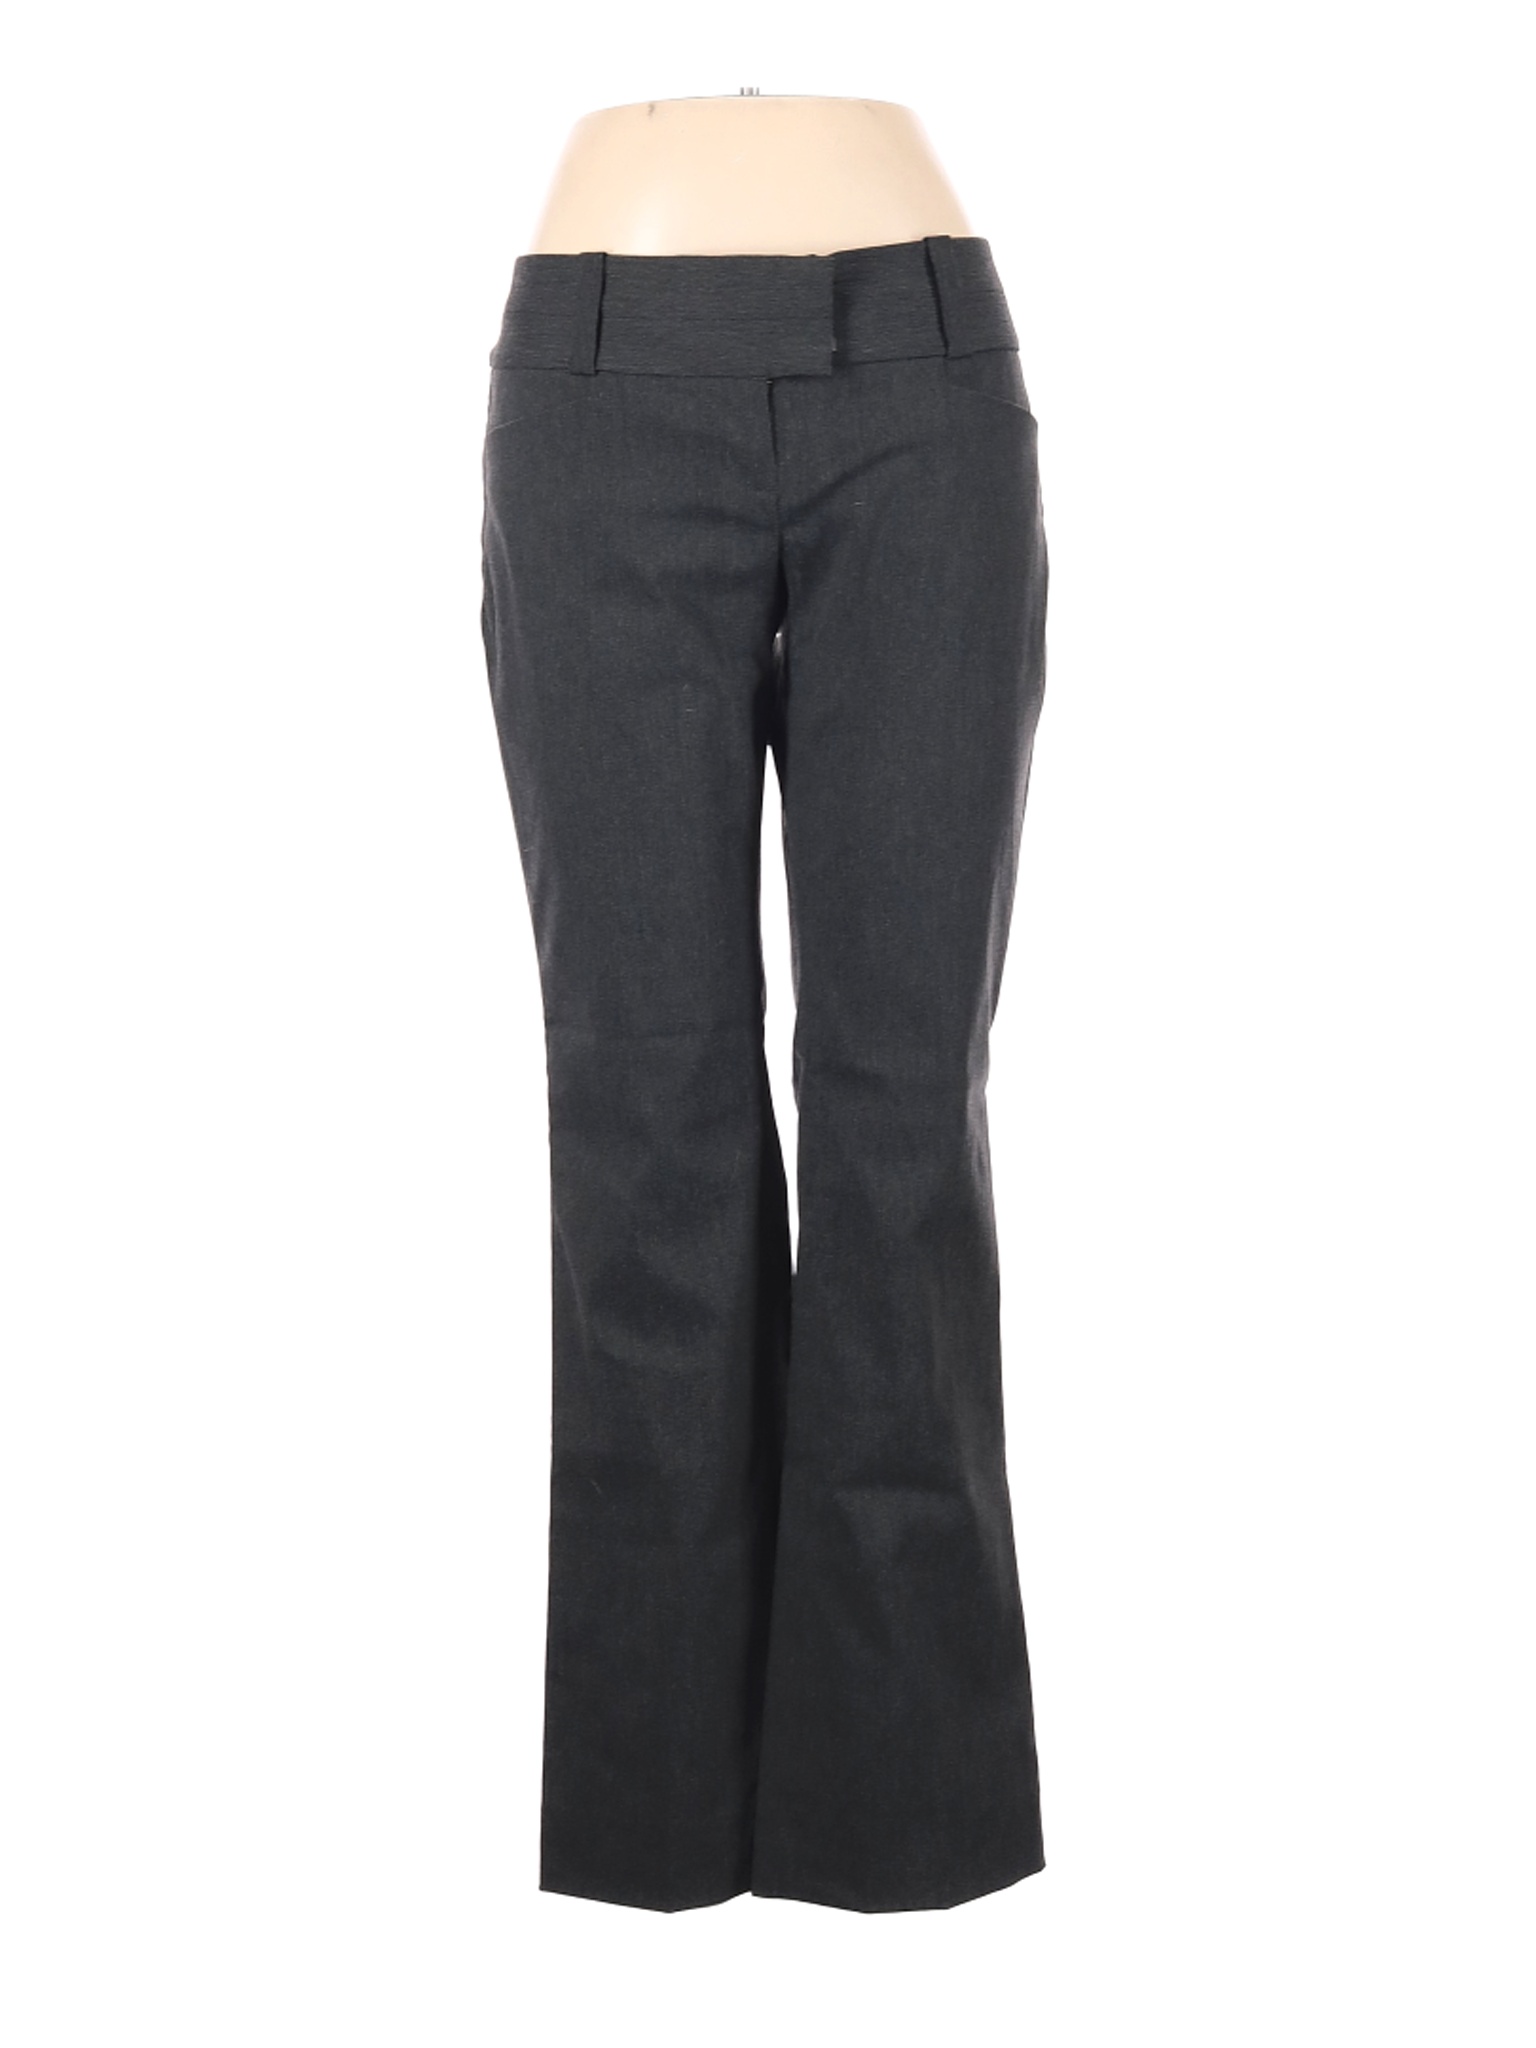 NWT The Limited Women Gray Khakis 4 | eBay